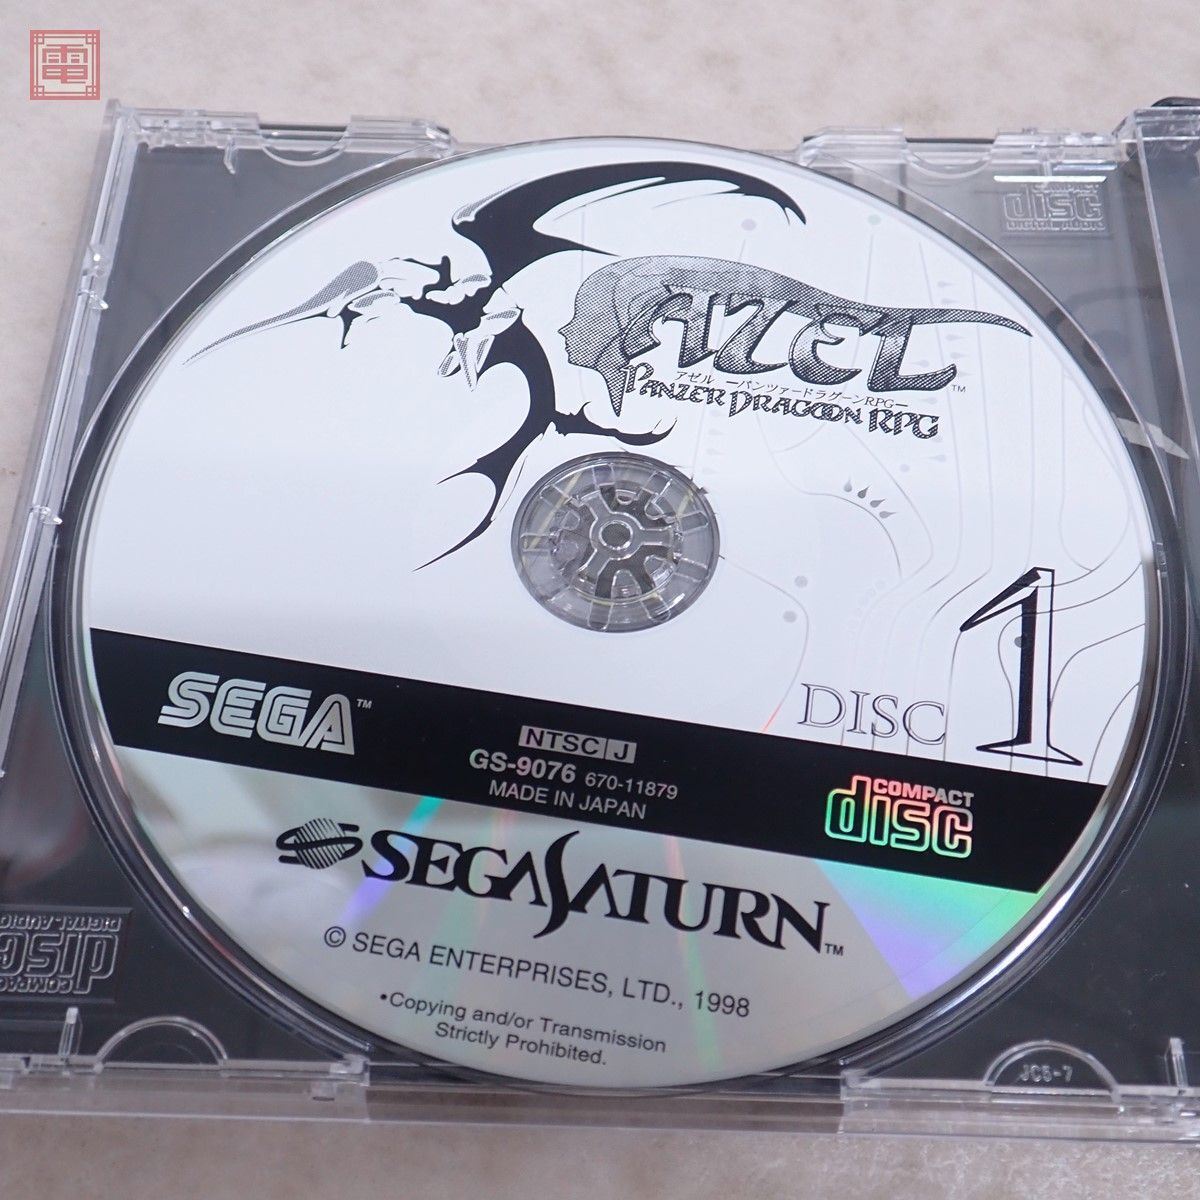  operation guarantee goods SS Sega Saturn pants .- dragoon /tsuvai/azeru together 3 pcs set PANZER DRAGOON Sega SEGA box opinion attaching [10